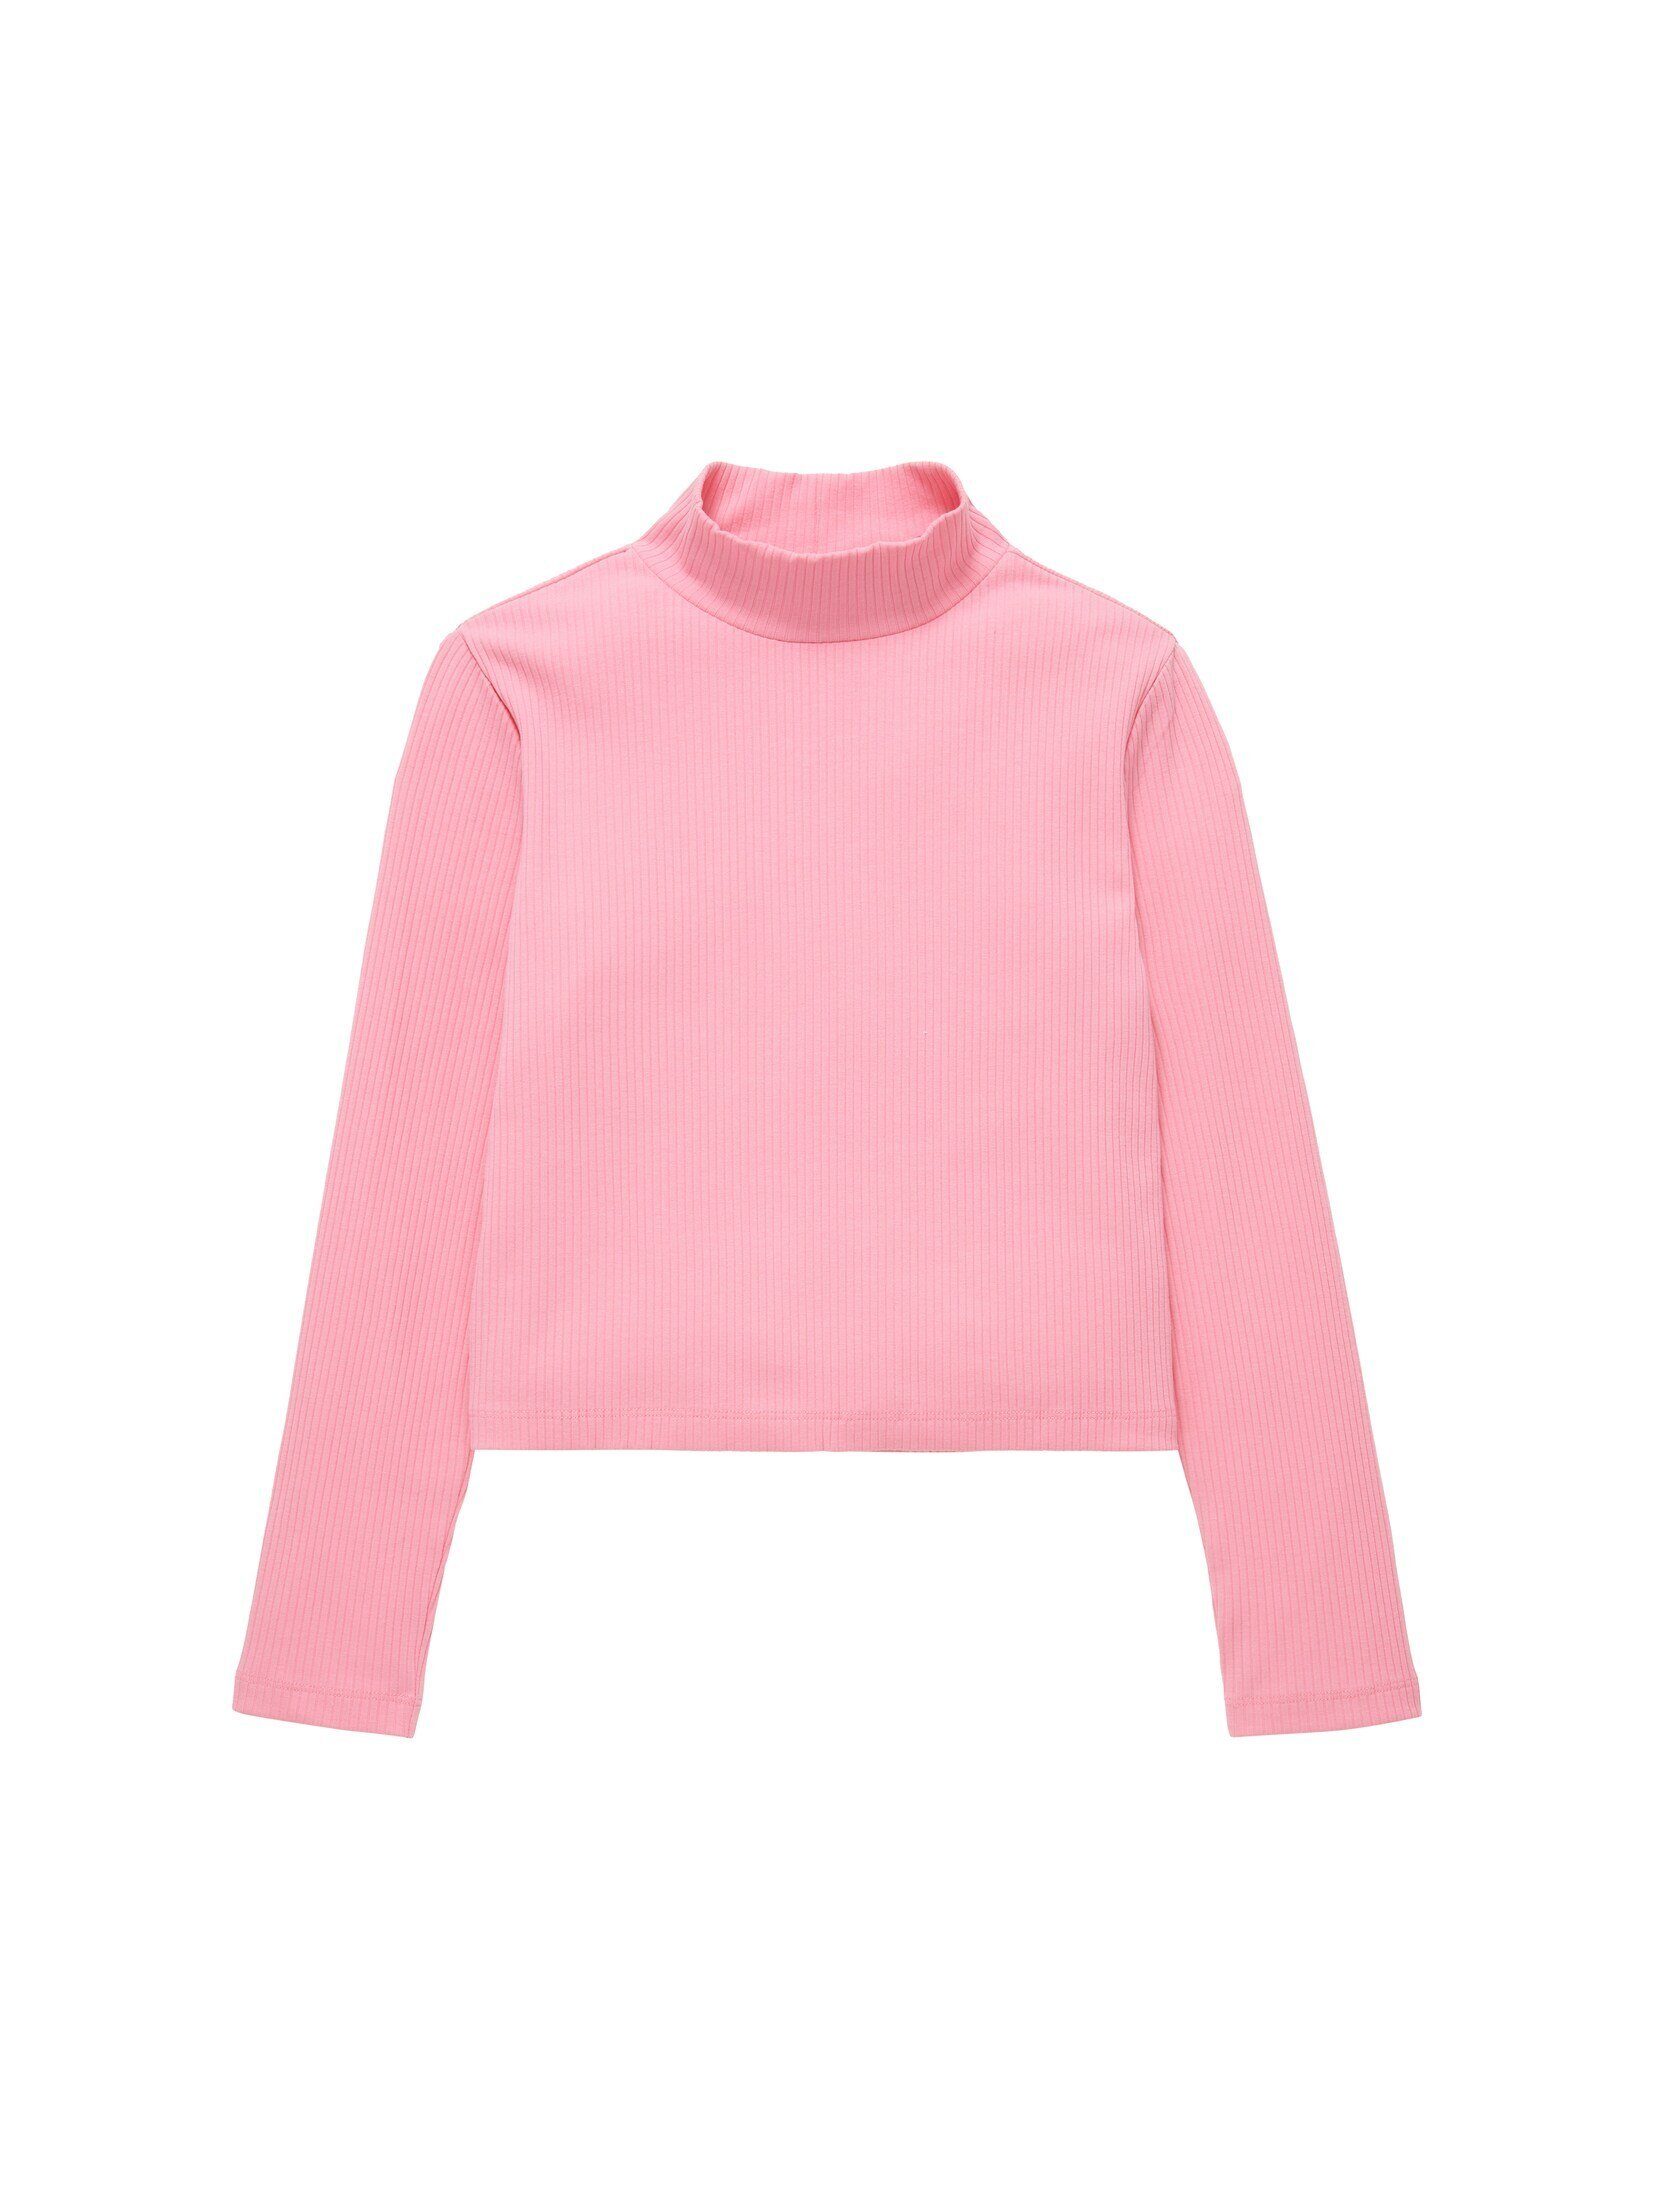 TOM TAILOR T-Shirt Cropped pink Langarmshirt Polyester sunrise recyceltem mit